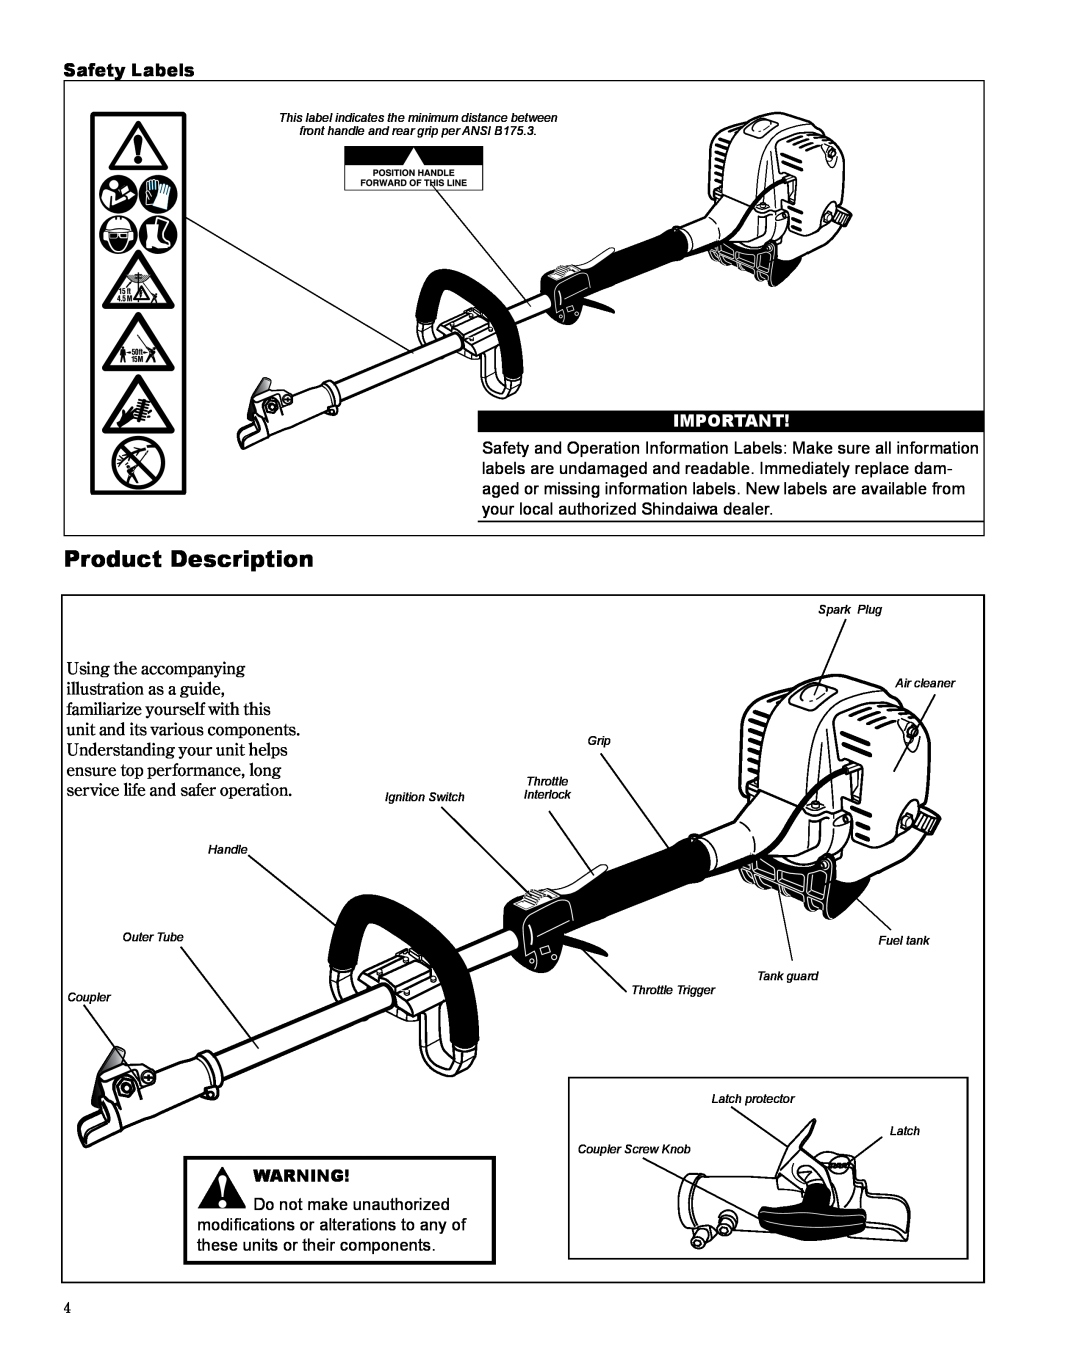 Shindaiwa M254 manual Product Description, Safety Labels 